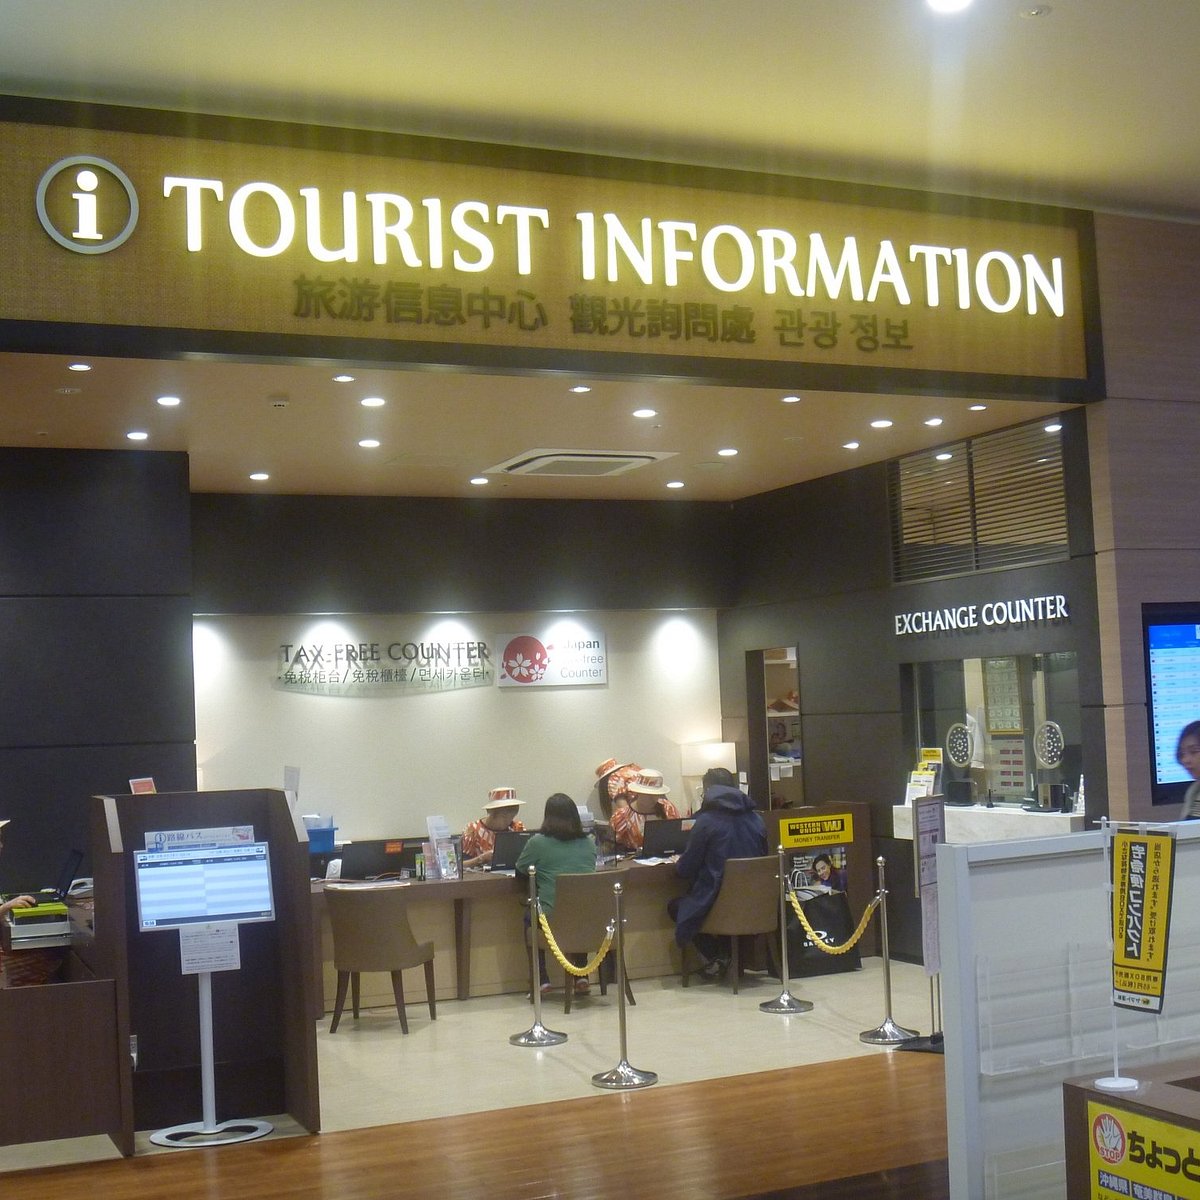 Aeon Mall Okinawa Rycom Tourist Information Kitanakagusuku Son 22 All You Need To Know Before You Go With Photos Tripadvisor